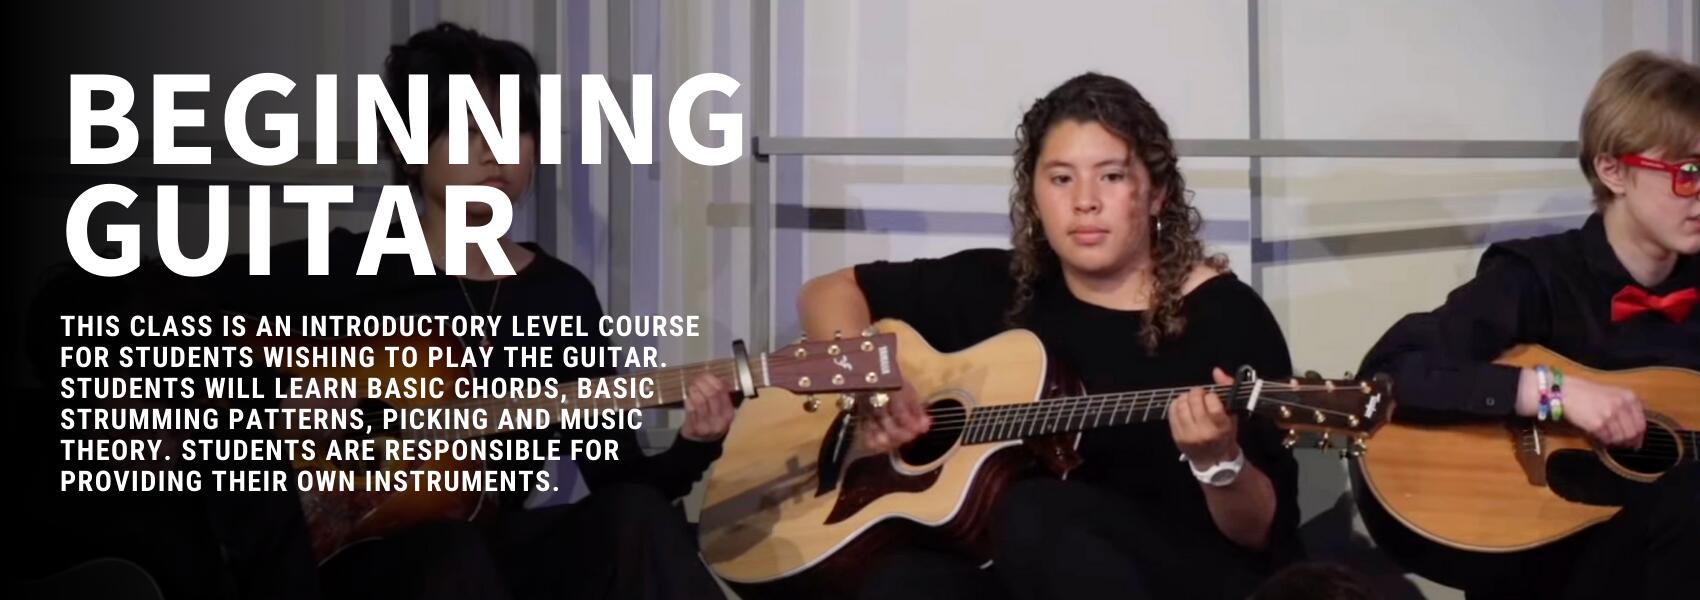 Beginning Guitar students